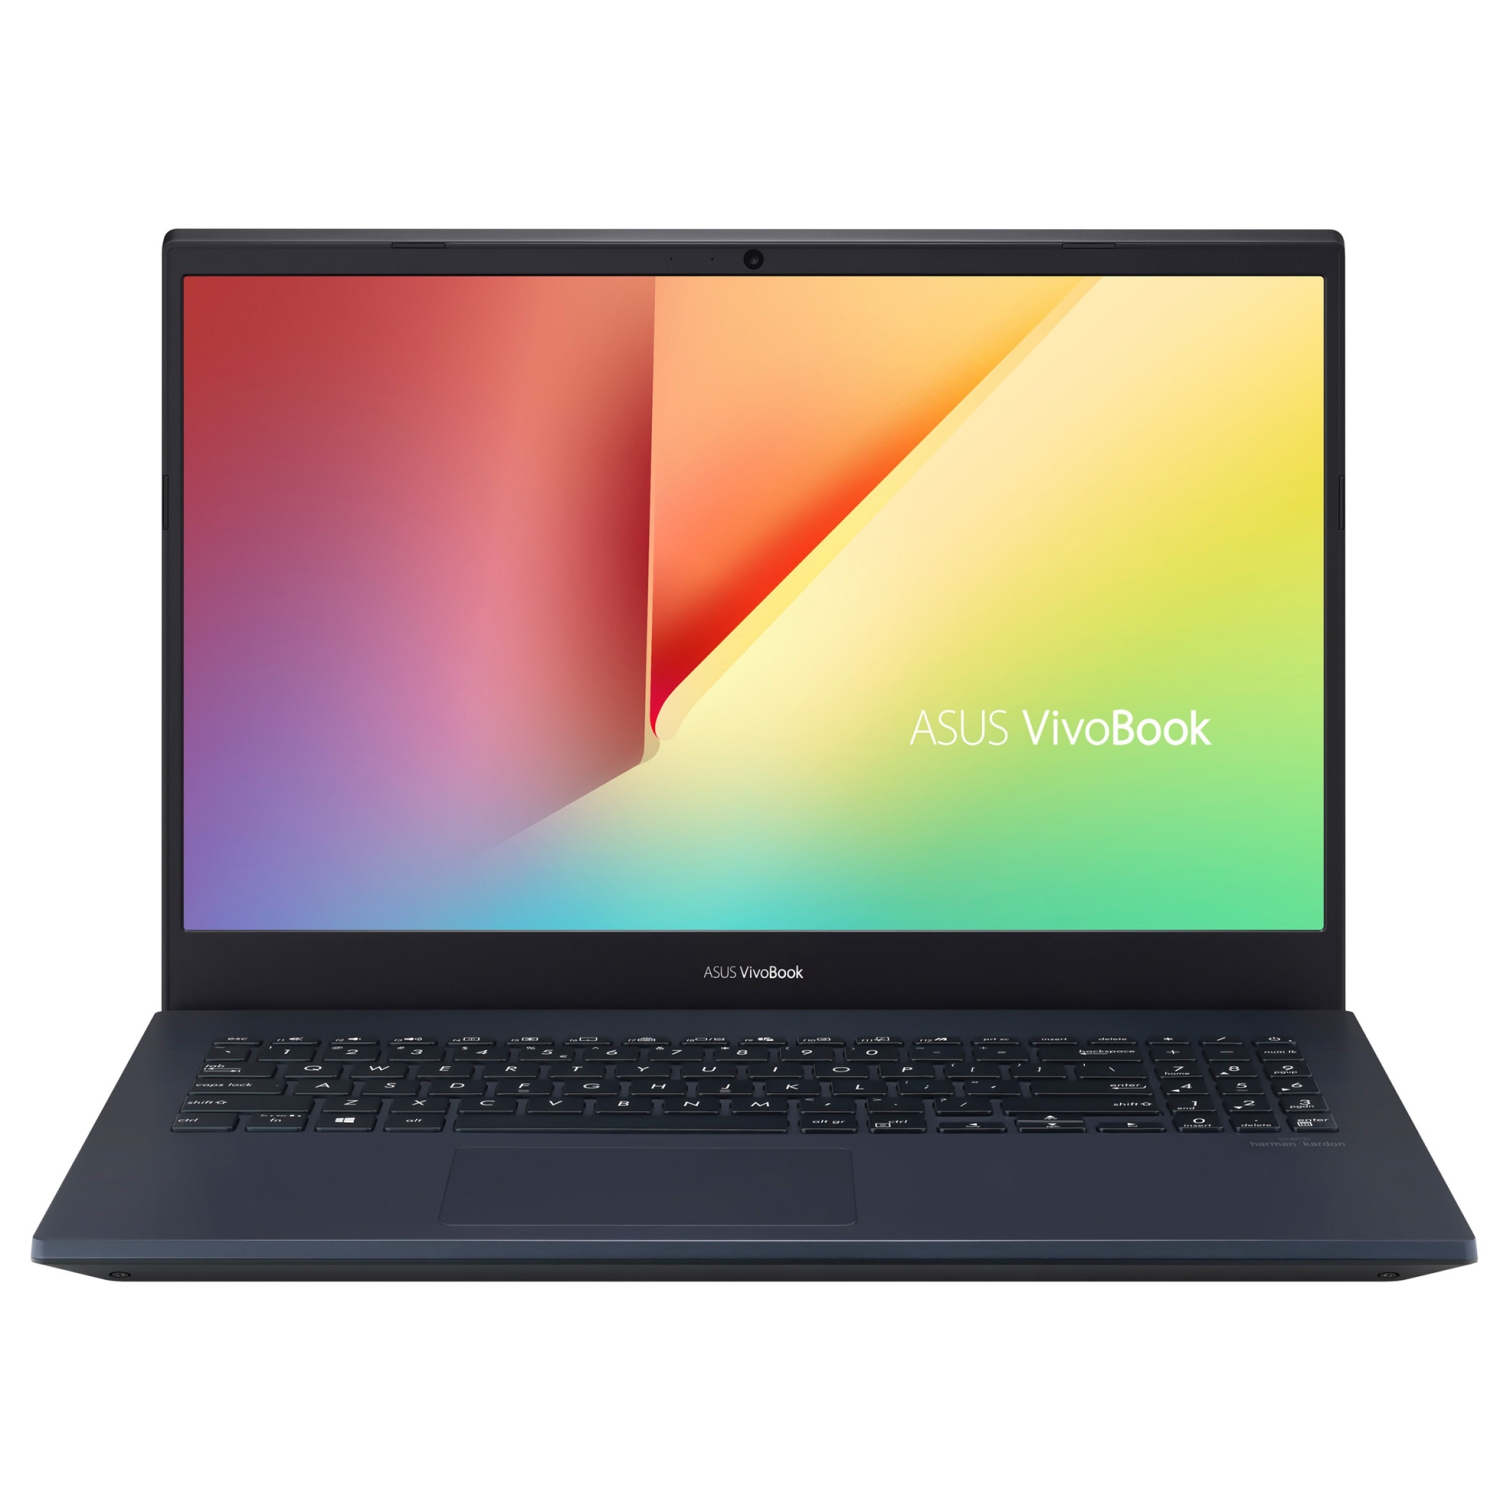 Custom ASUS VivoBook Laptop (Intel i5-10300H, 36GB RAM, 1TB PCIe SSD, NVIDIA GTX 1650, 15.6" Full HD (1920x1080), Win 10 Pro)